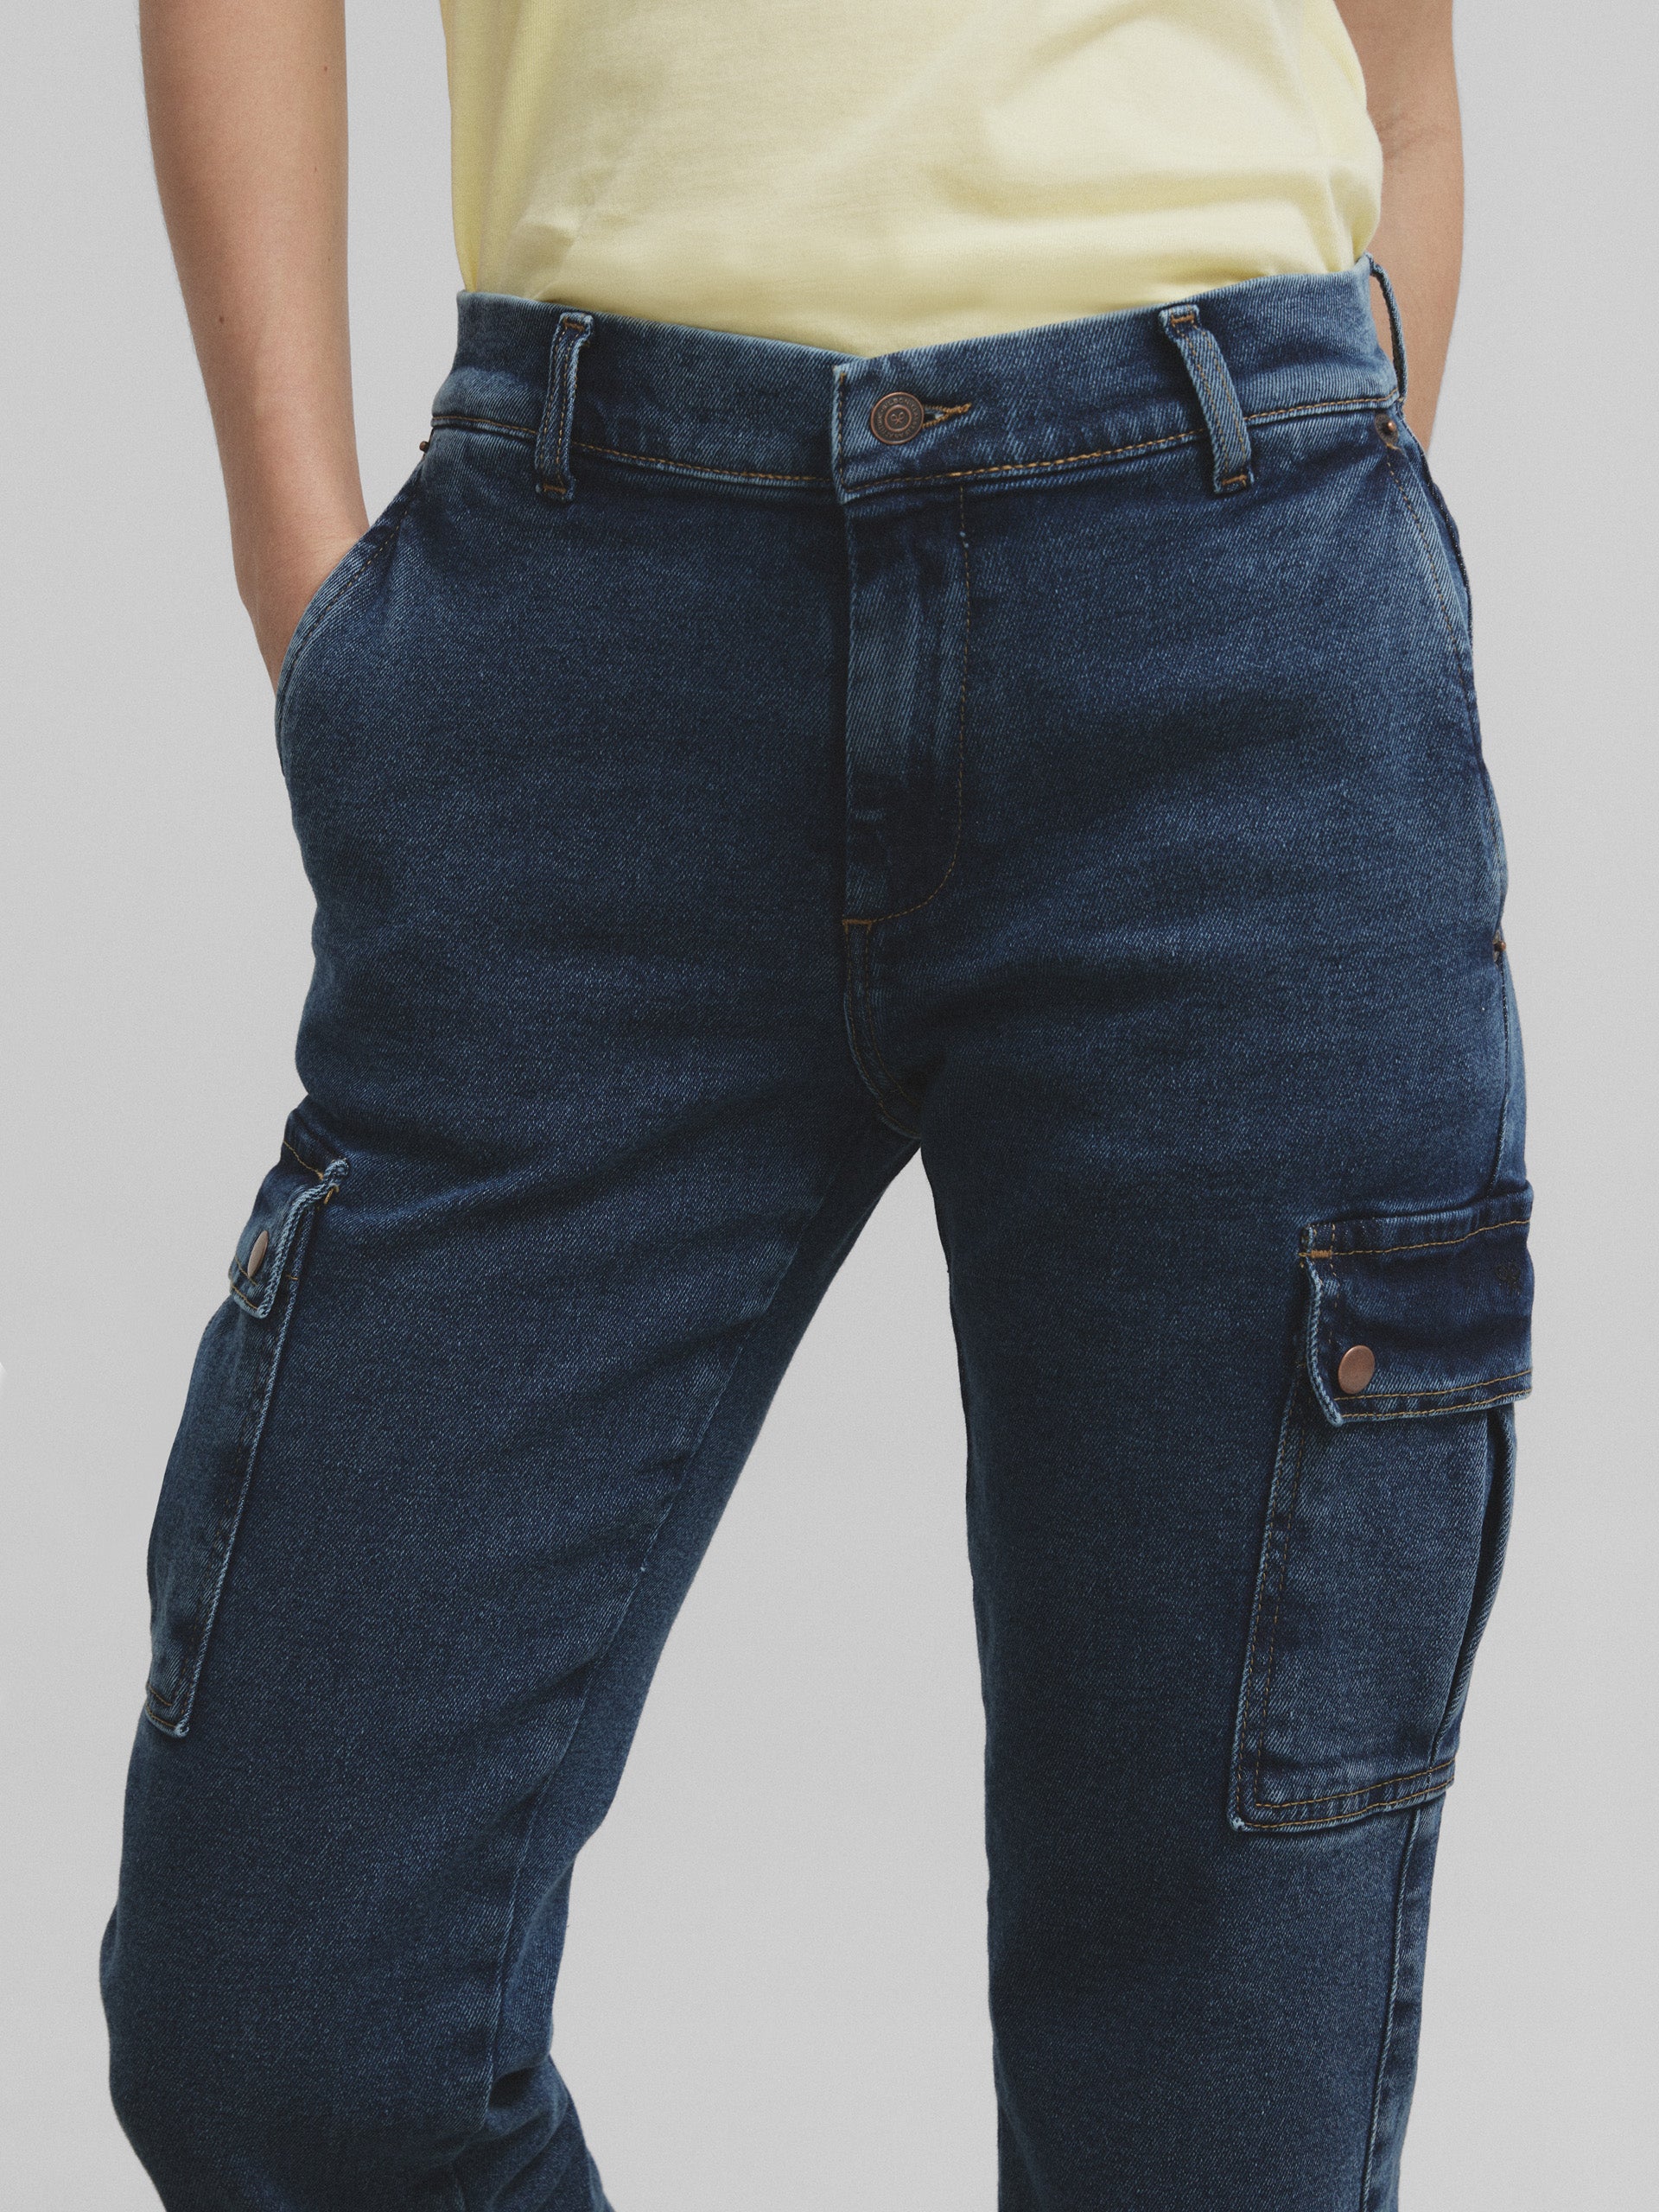 Women's blue cargo denim pants